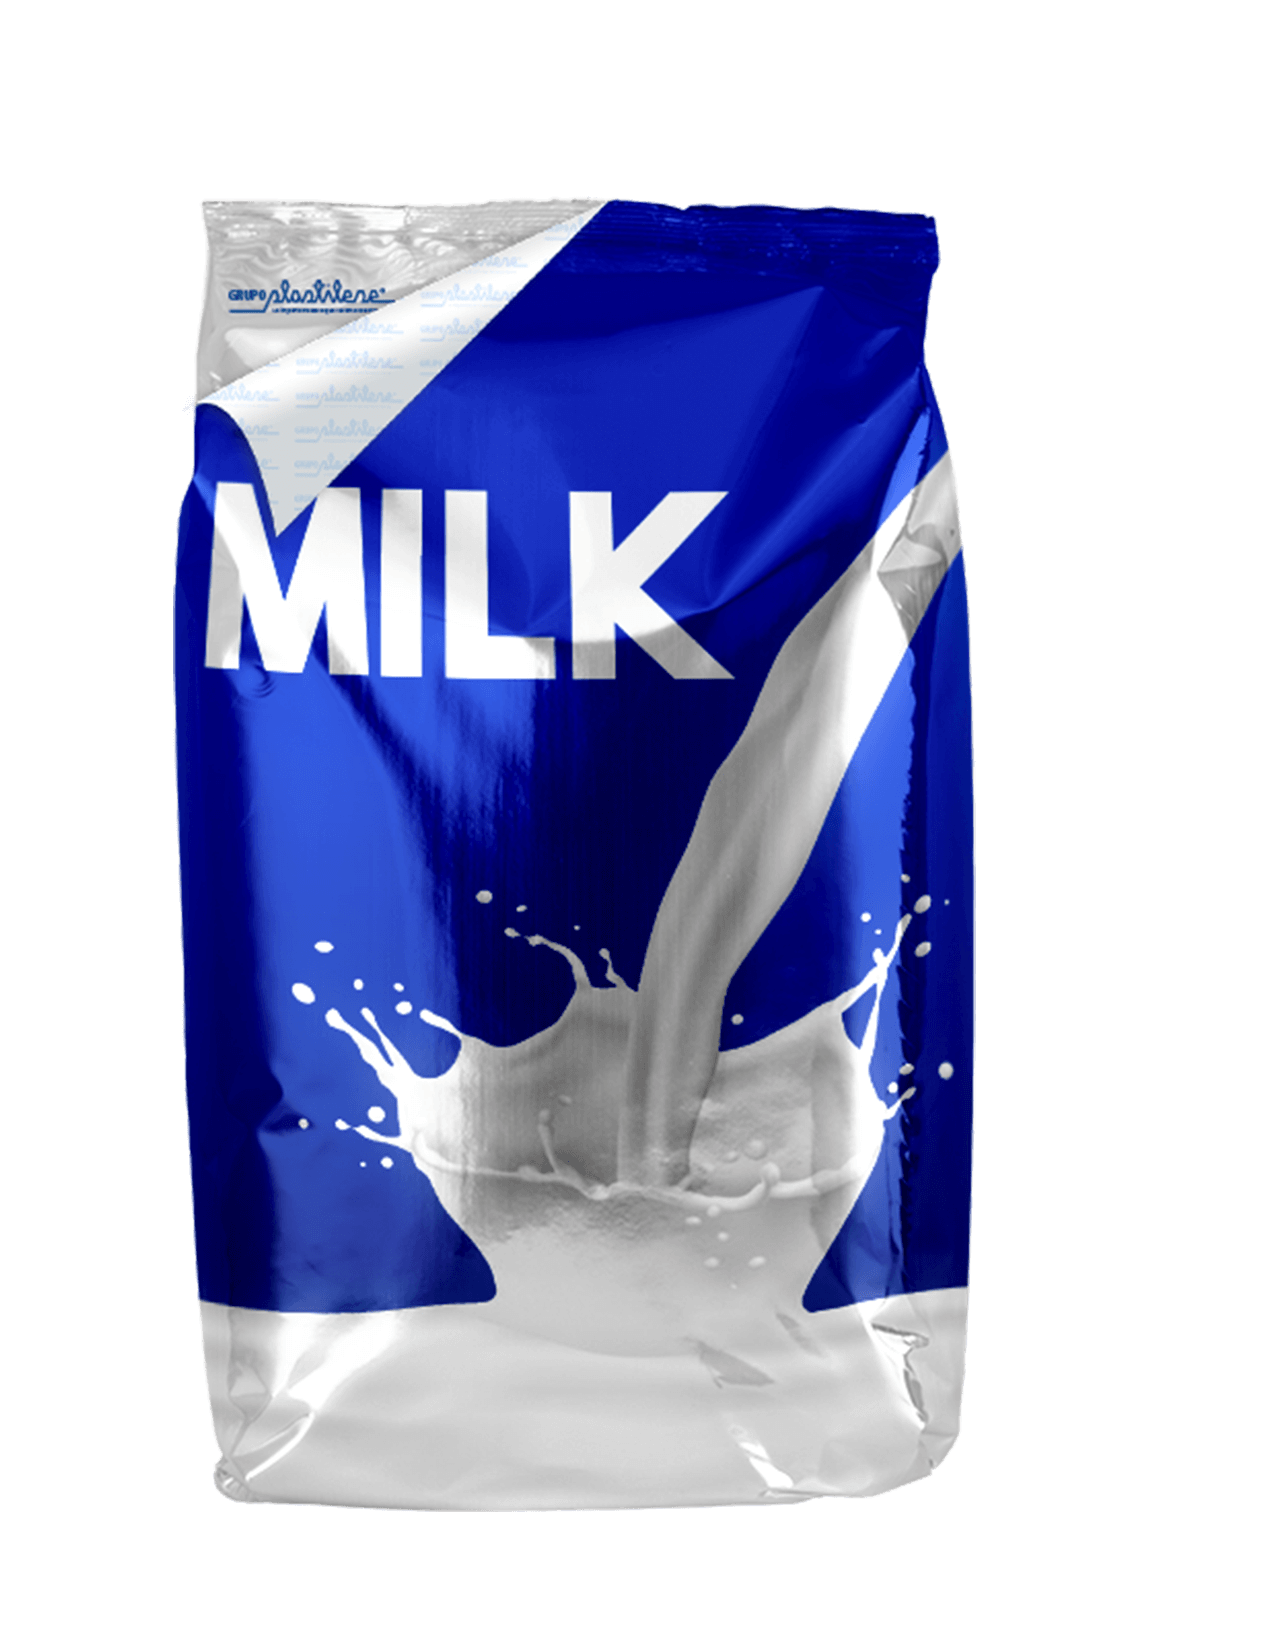 When plastic revolutionized milk consumption